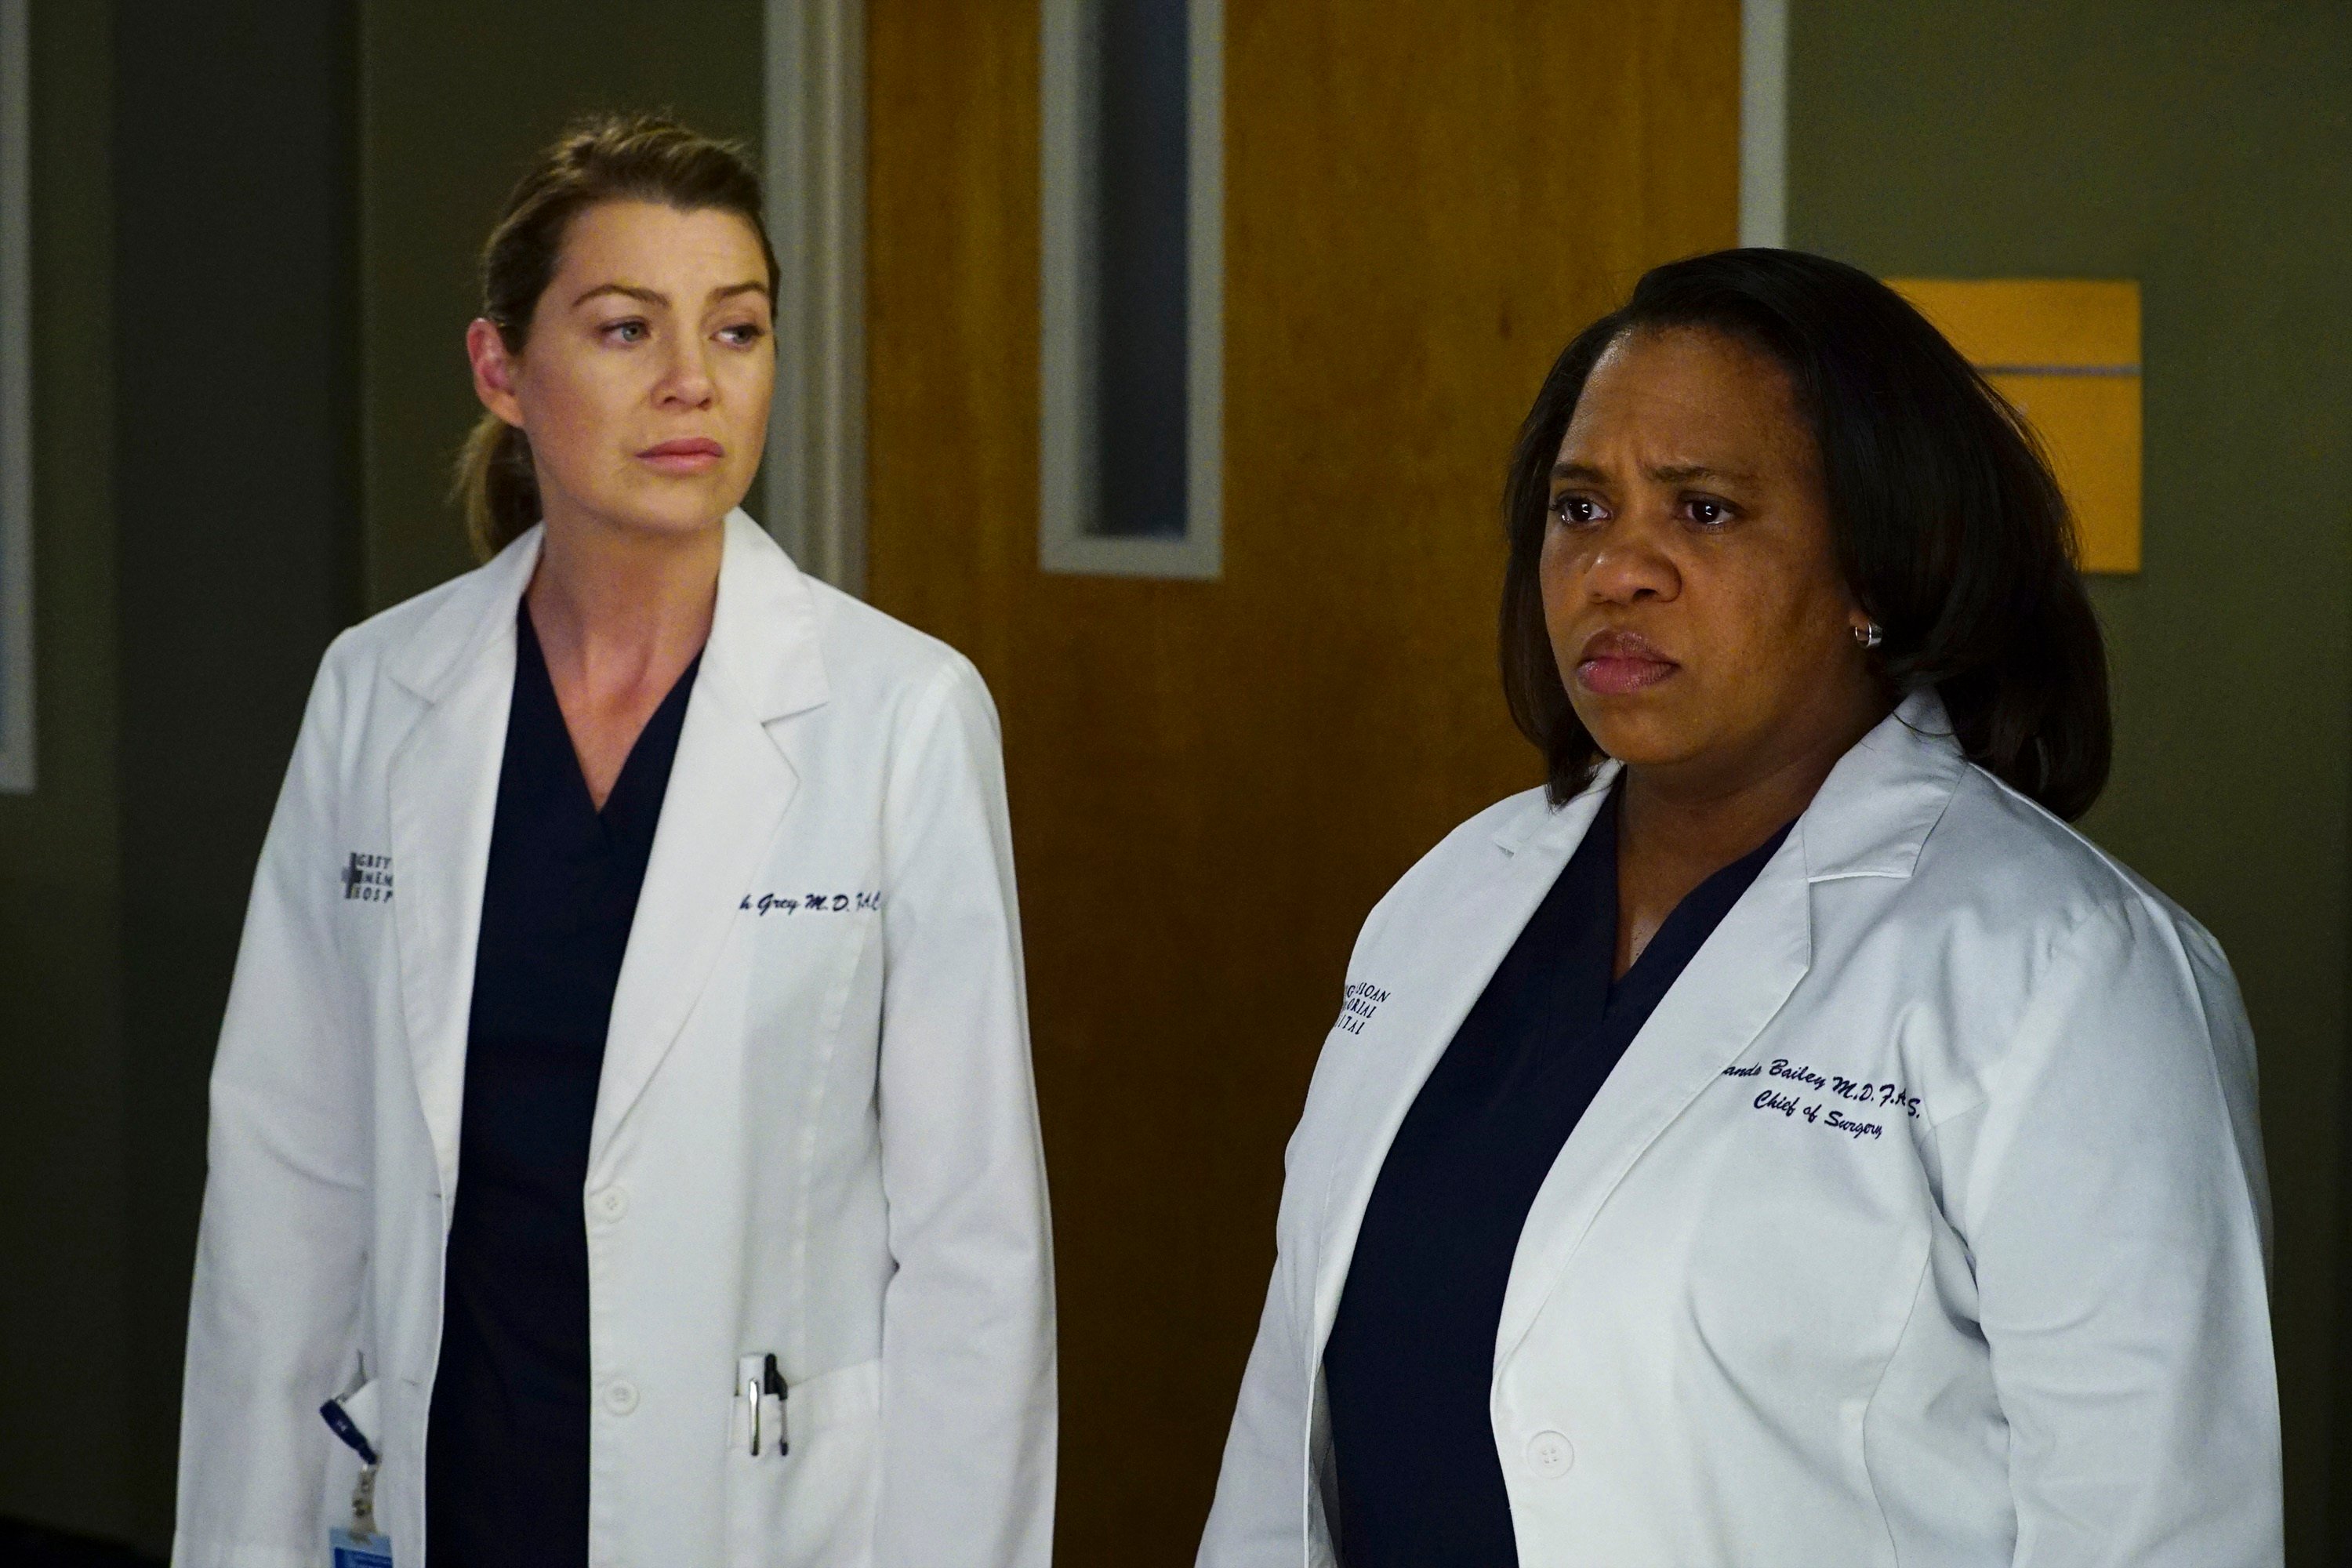 'Grey's Anatomy' stars Ellen Pompeo and Chandra Wilson